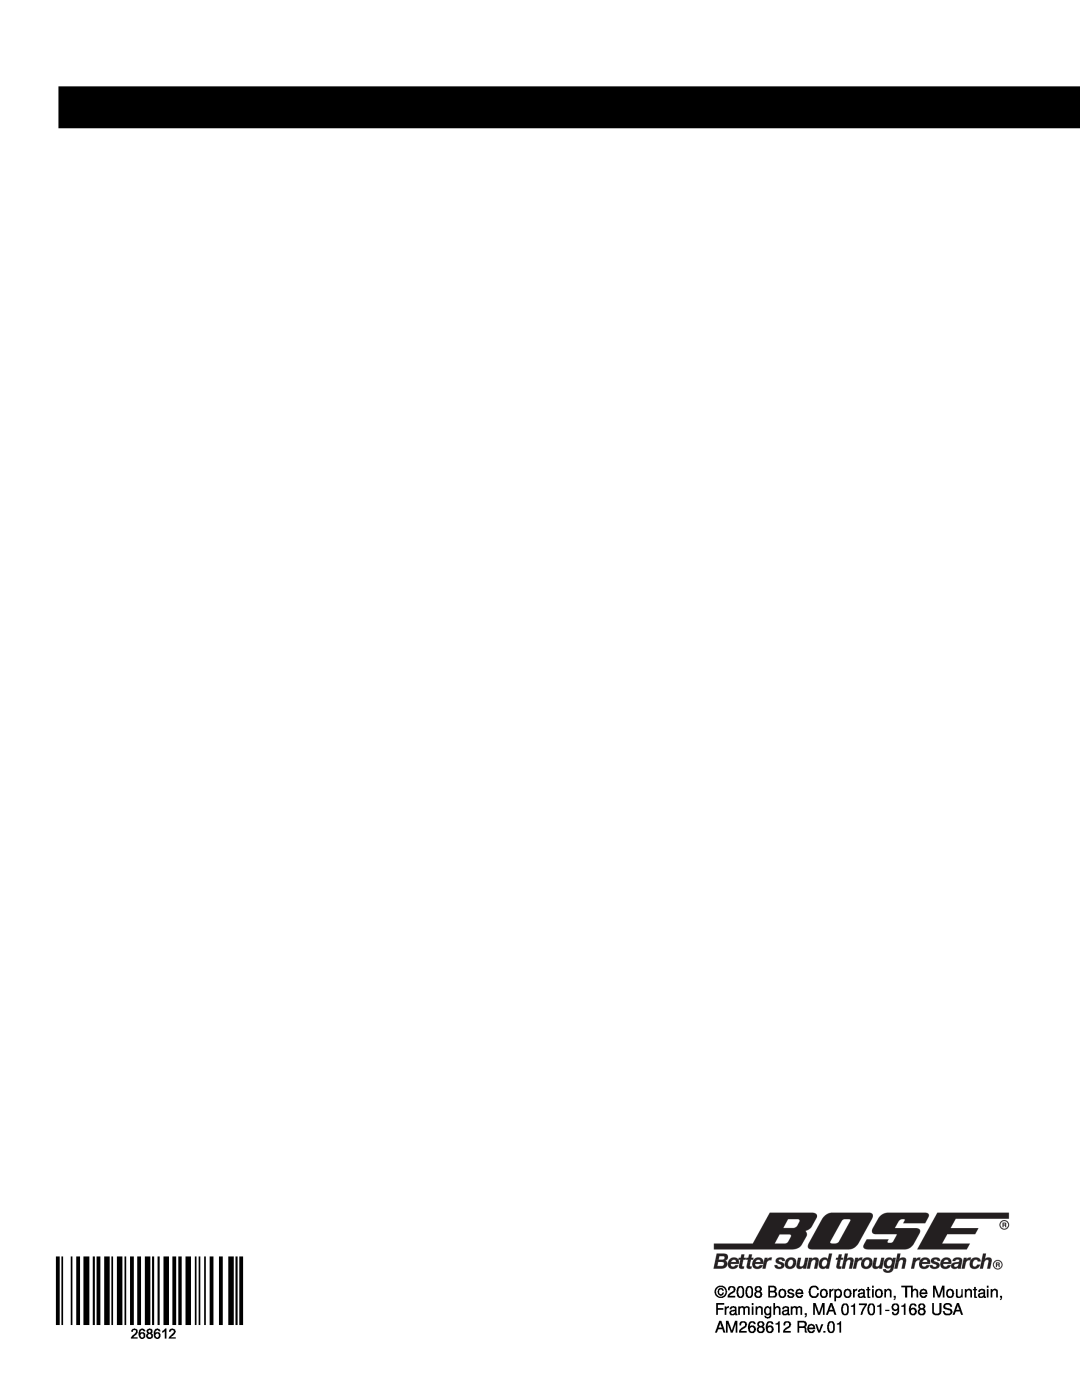 Bose 51 manual Bose Corporation, The Mountain Framingham, MA 01701-9168 USA, AM268612 Rev.01 